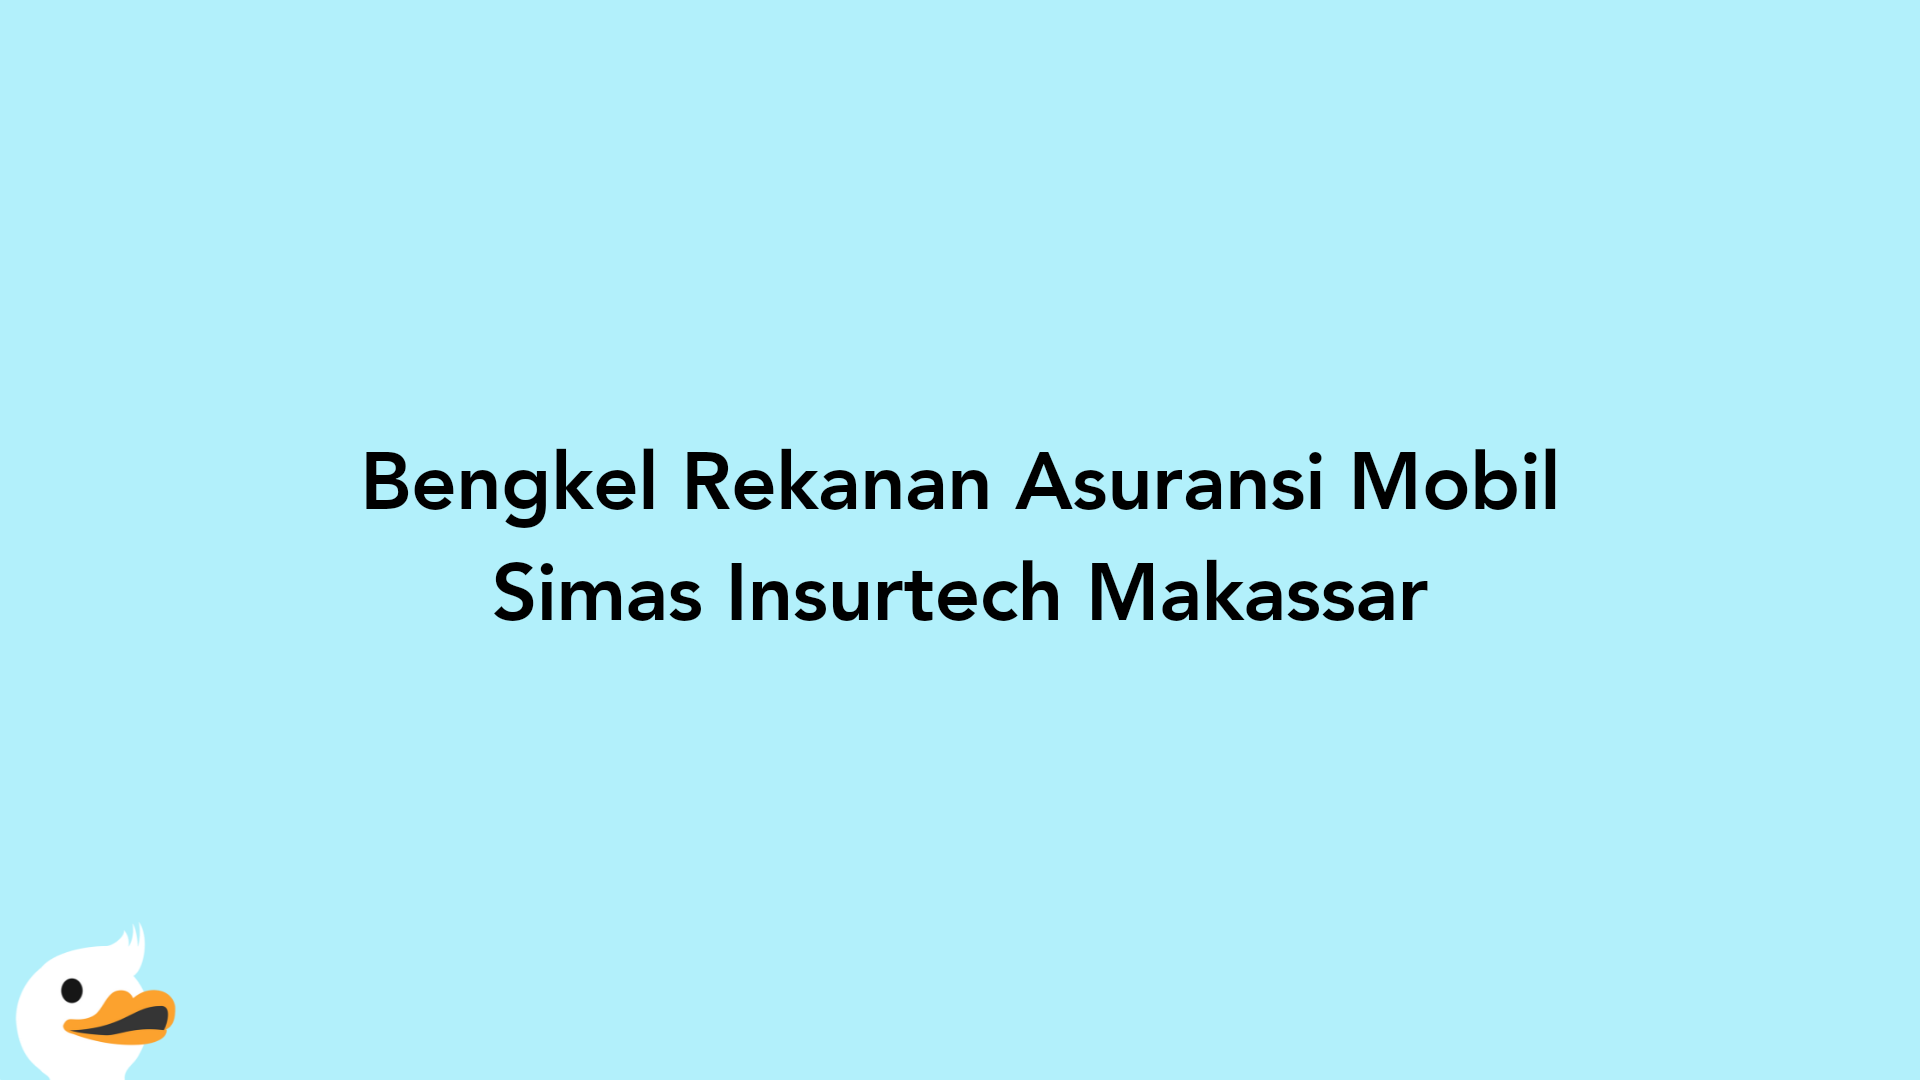 Bengkel Rekanan Asuransi Mobil Simas Insurtech Makassar